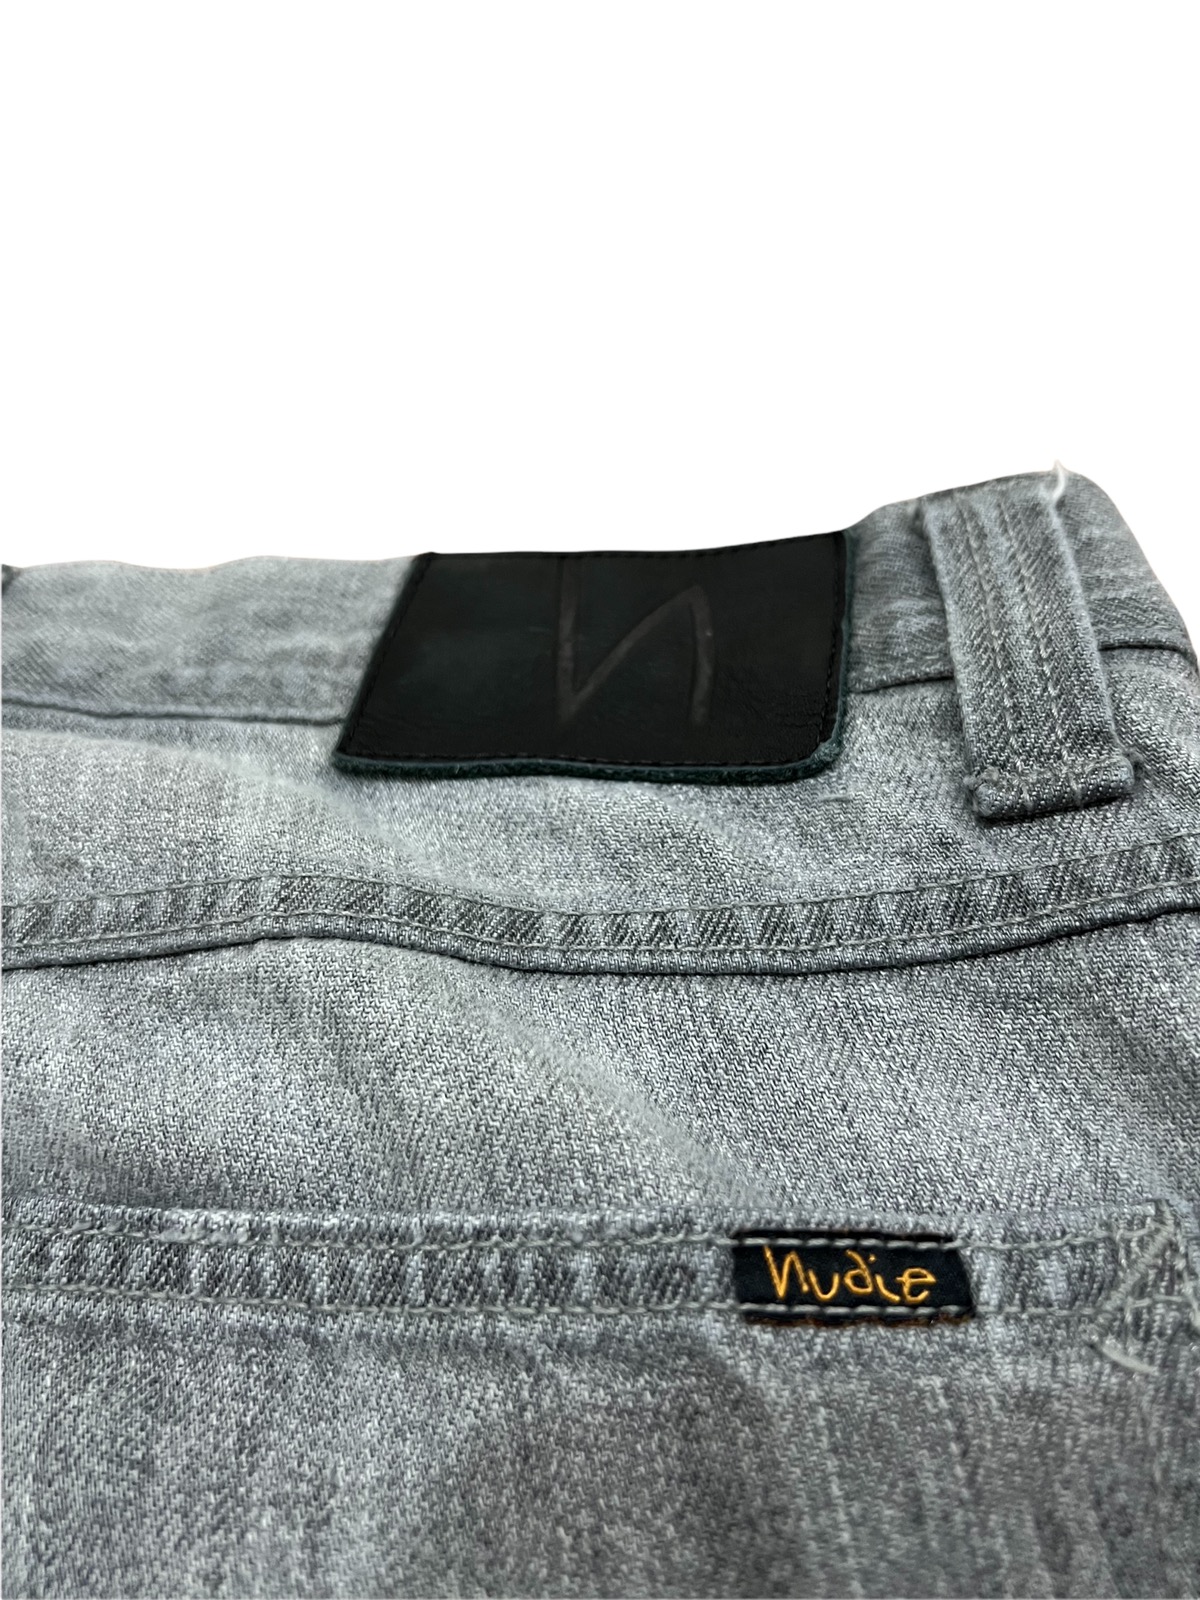 Nudie Regular Alf Used Grey Made In Italy Jeans - 11